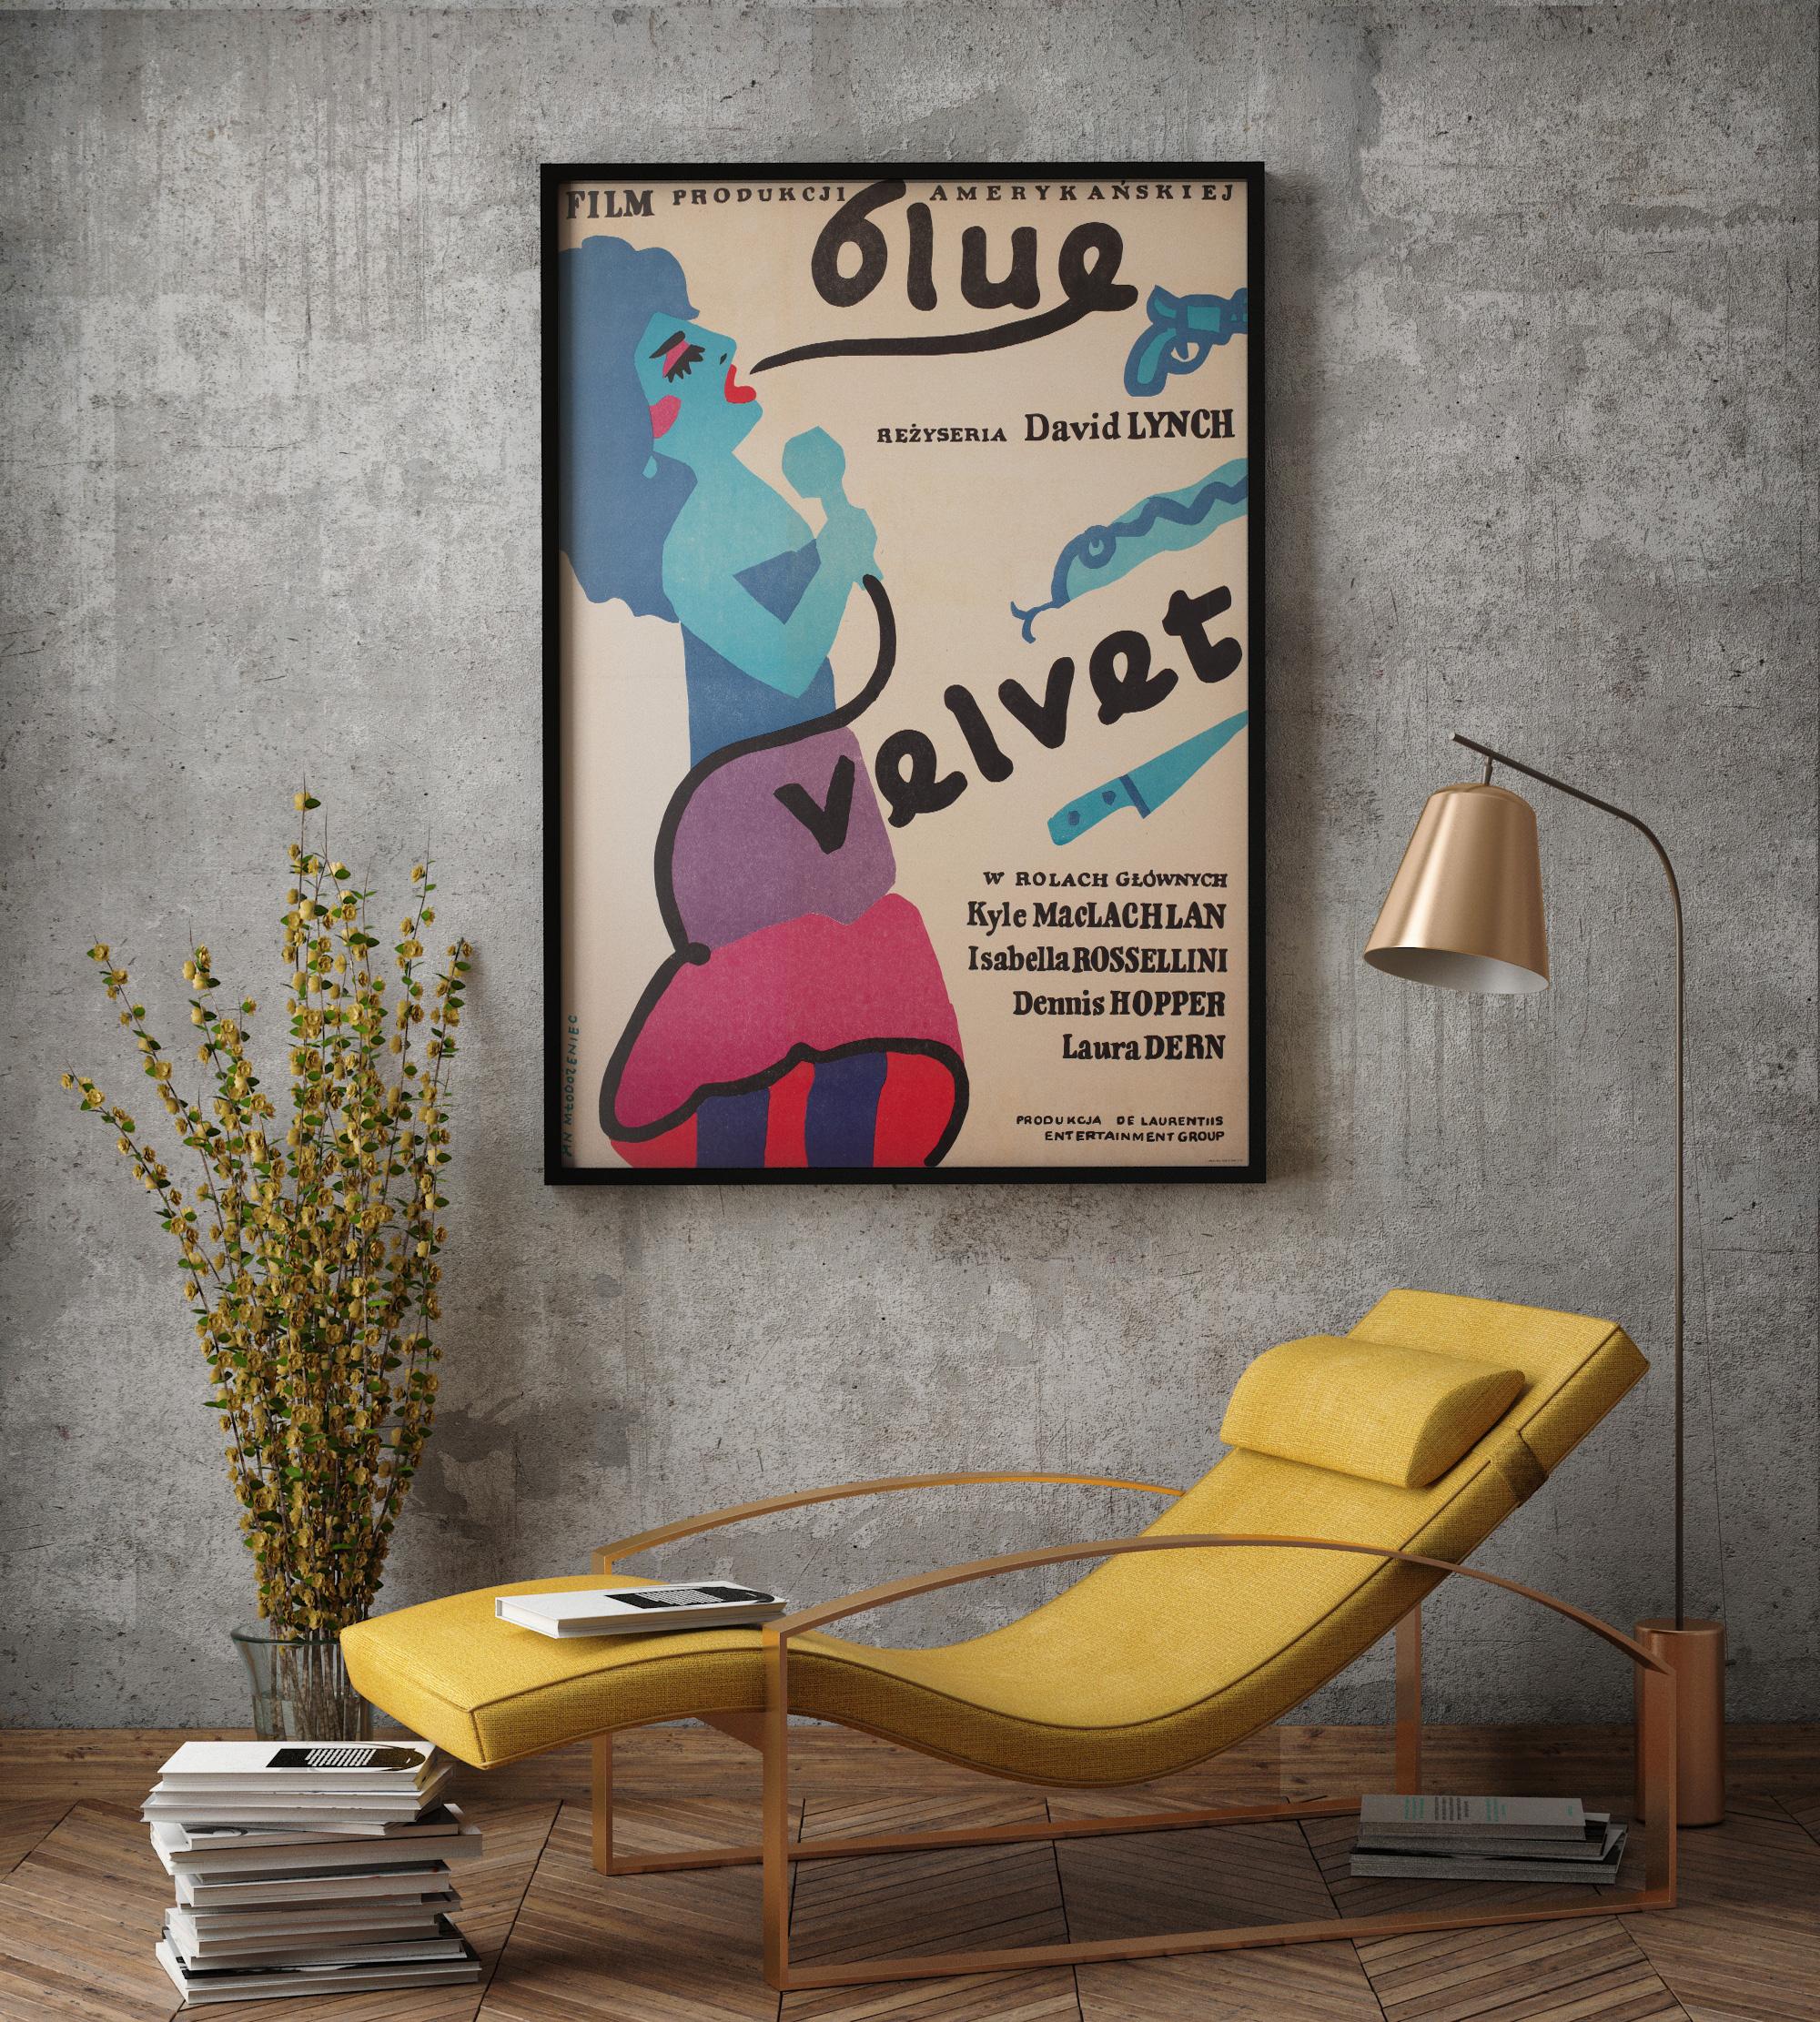 Blue Velvet, Polish Film Movie Poster, Jan Mlodozeniec, 1987 3